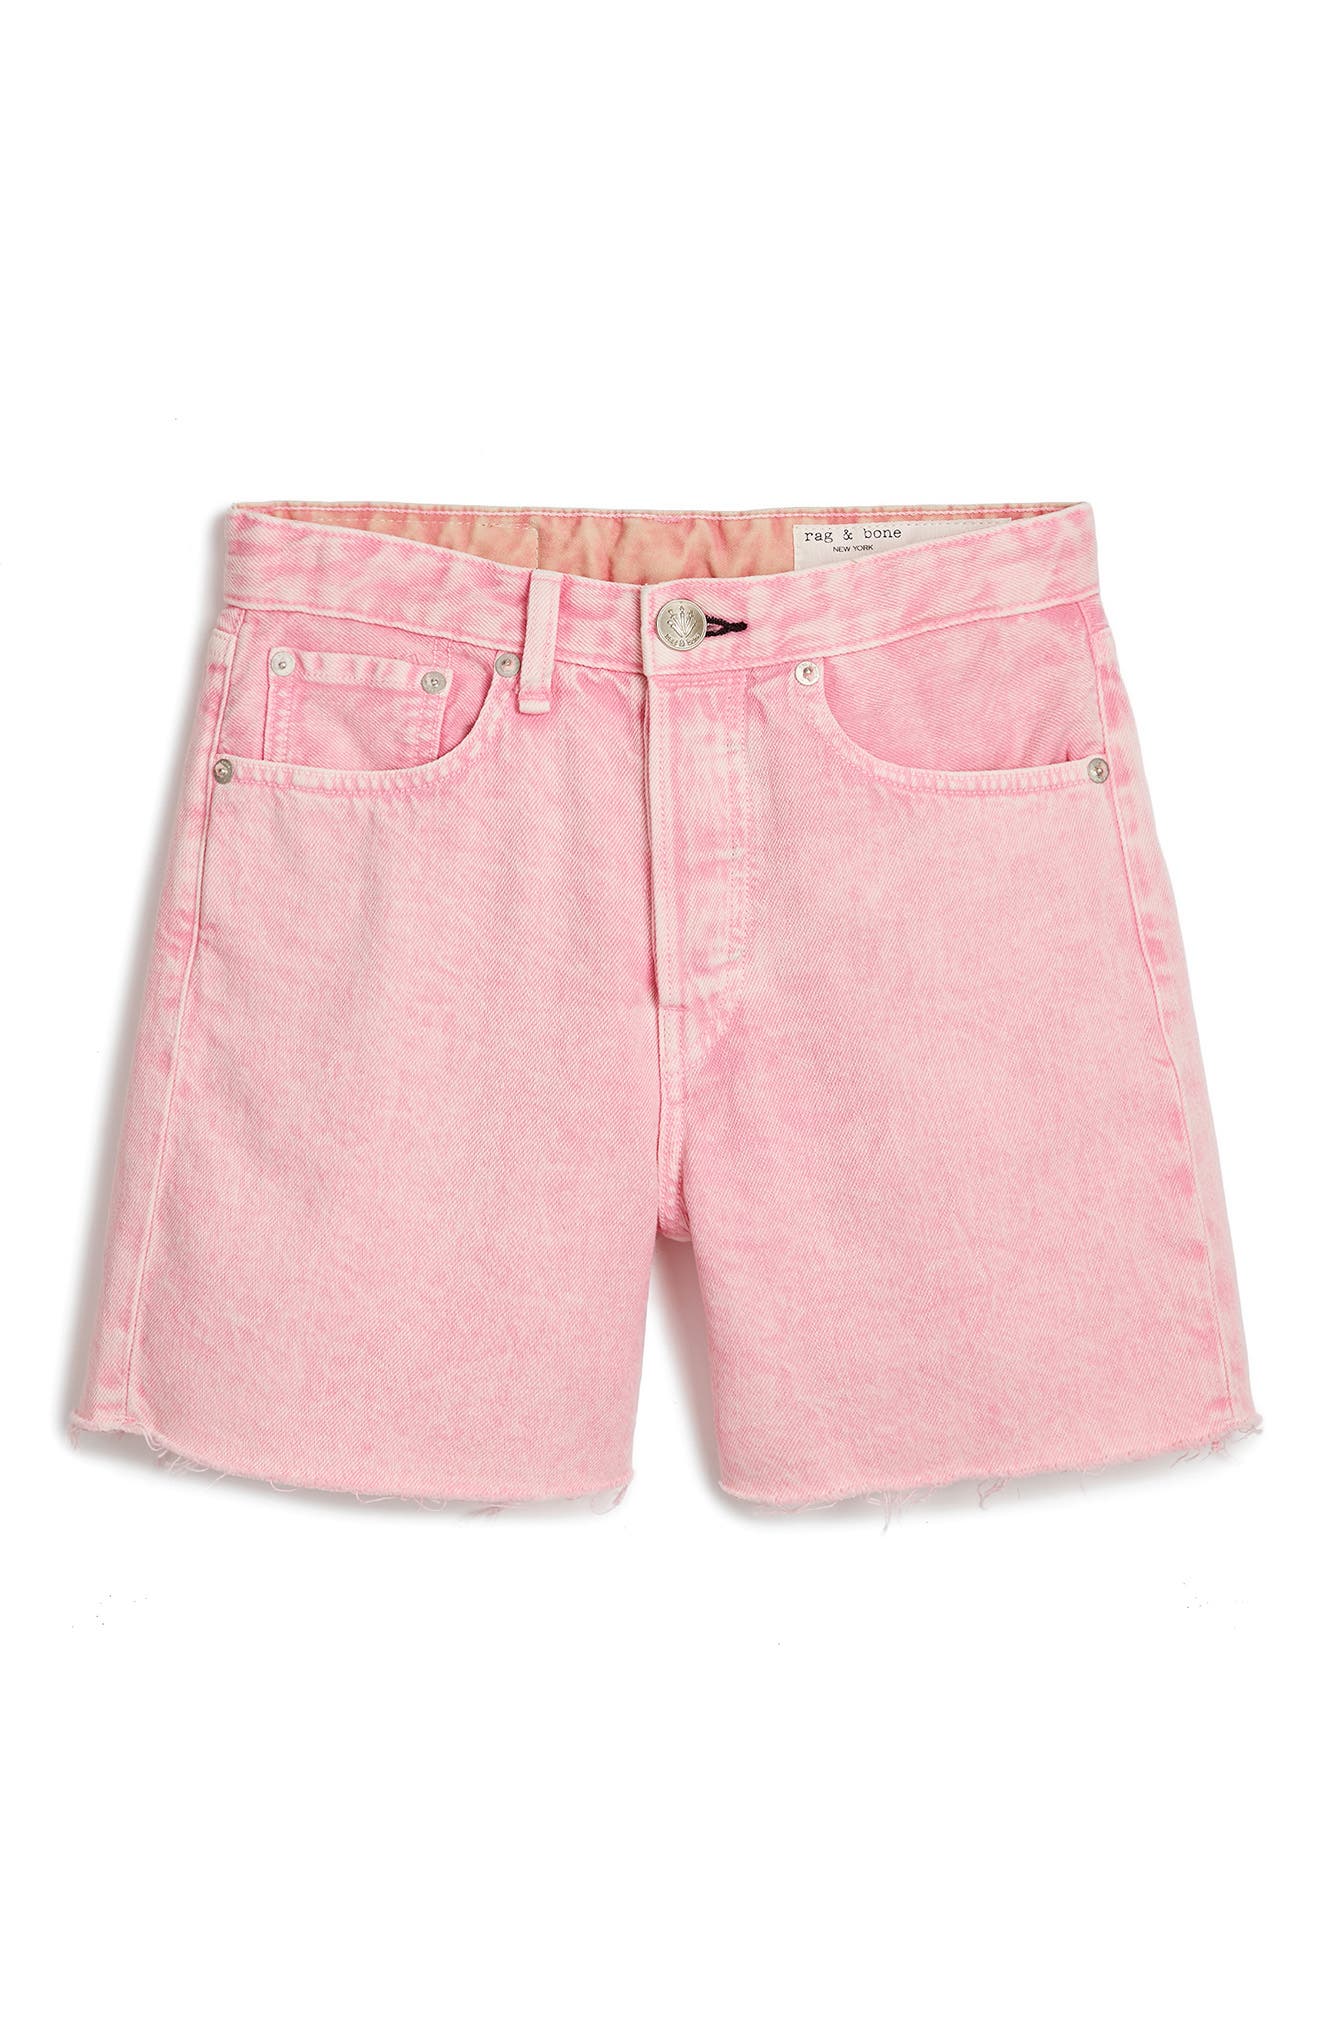 pink jean shorts